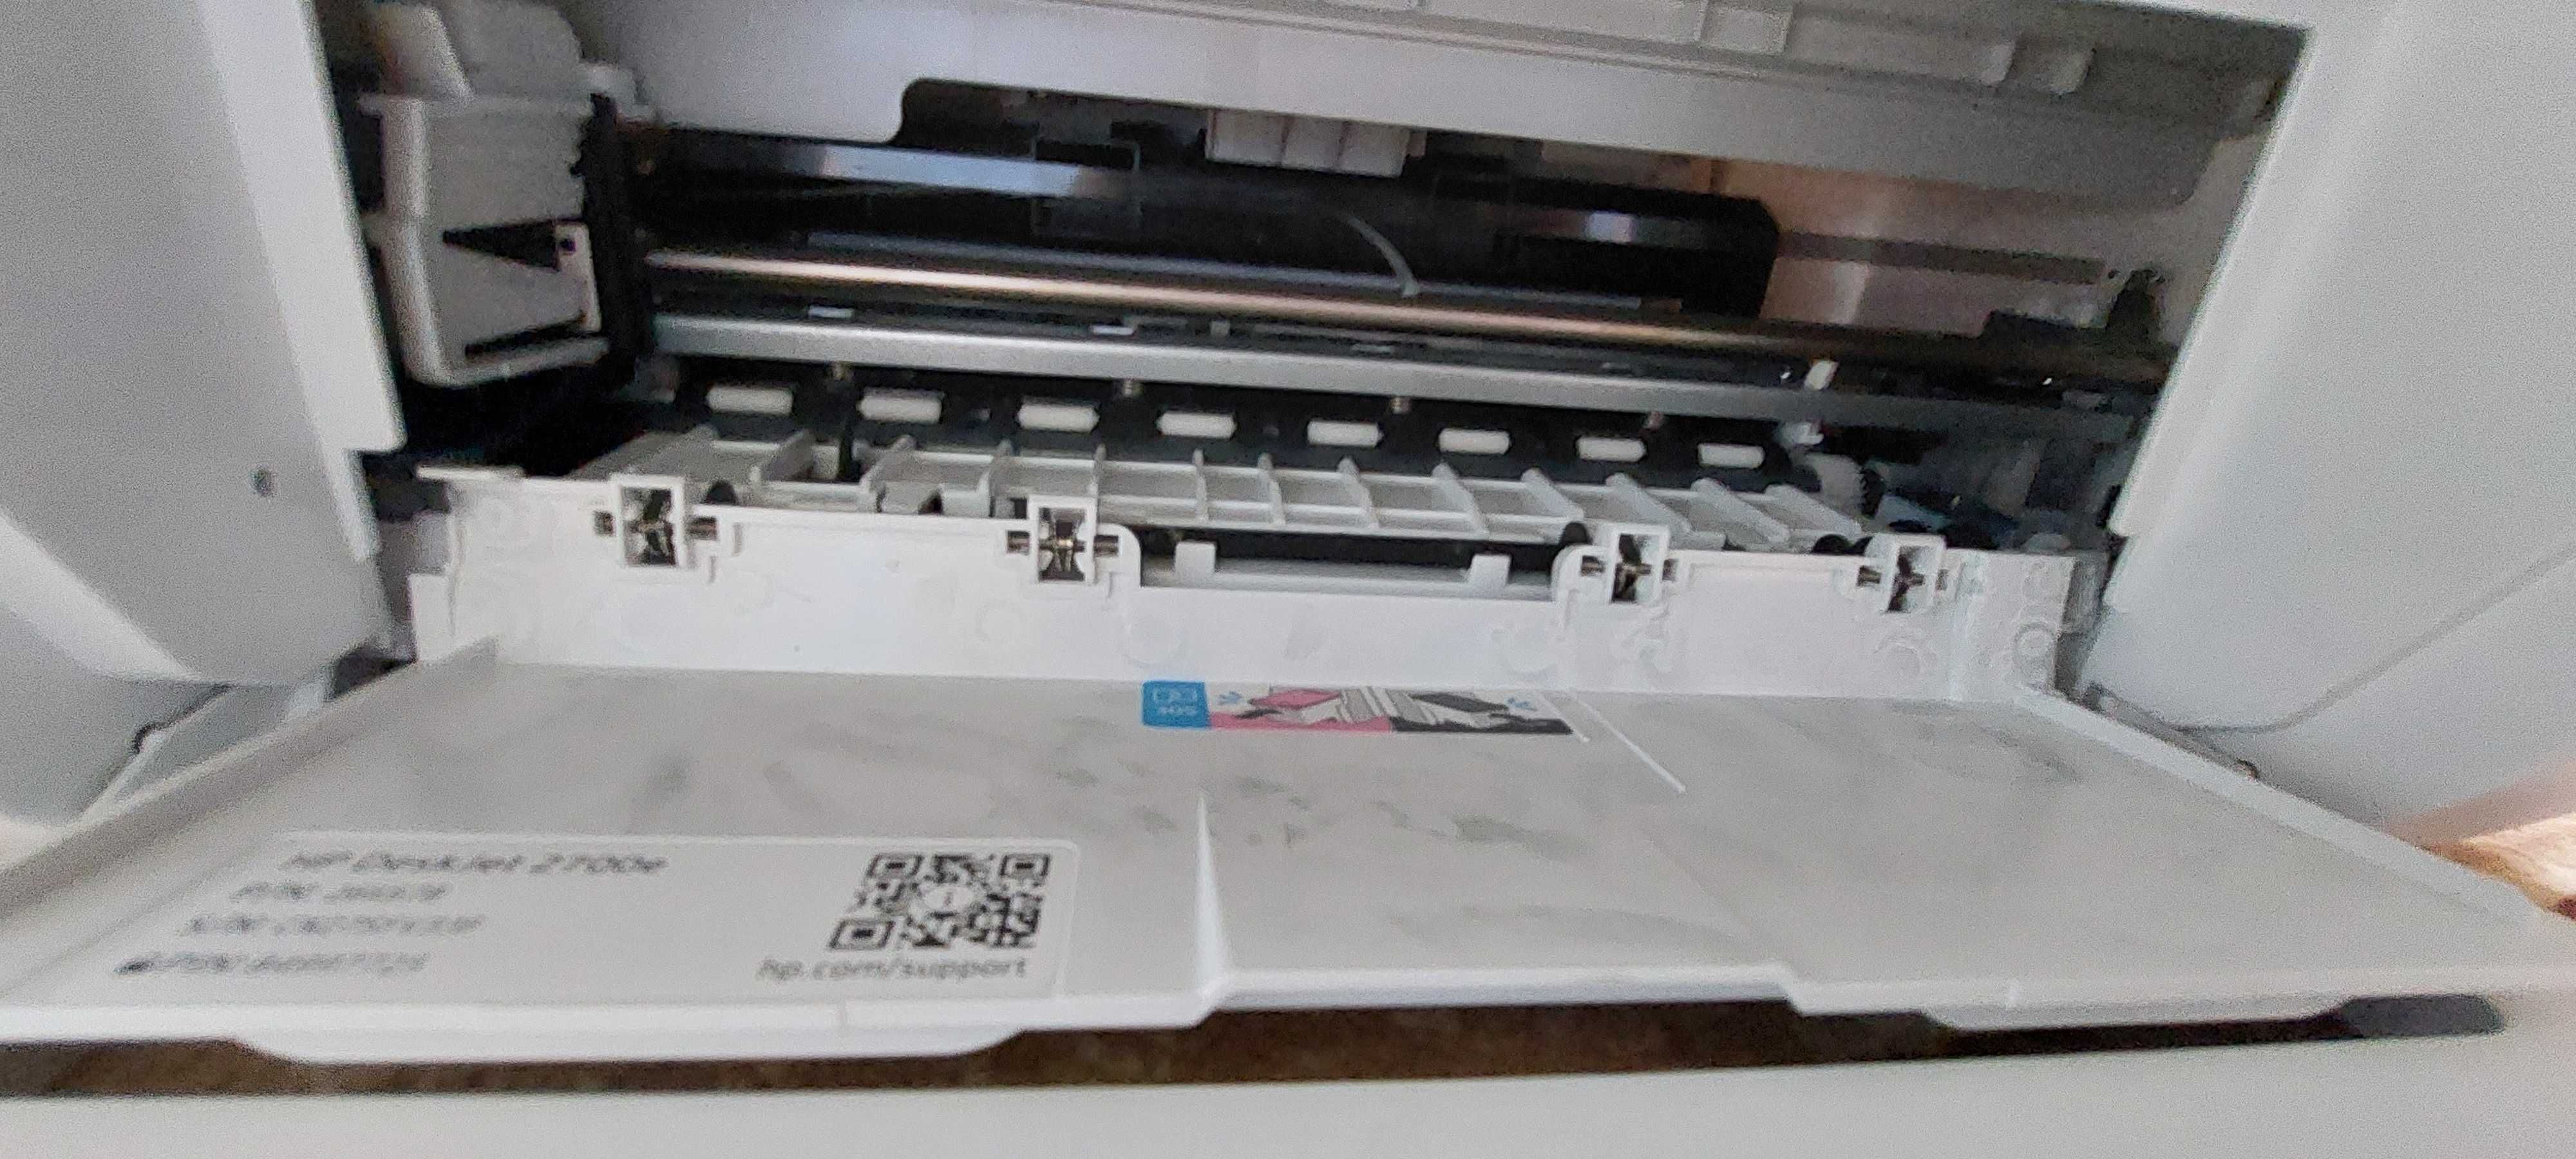 Imprimanta hp smart în garantie